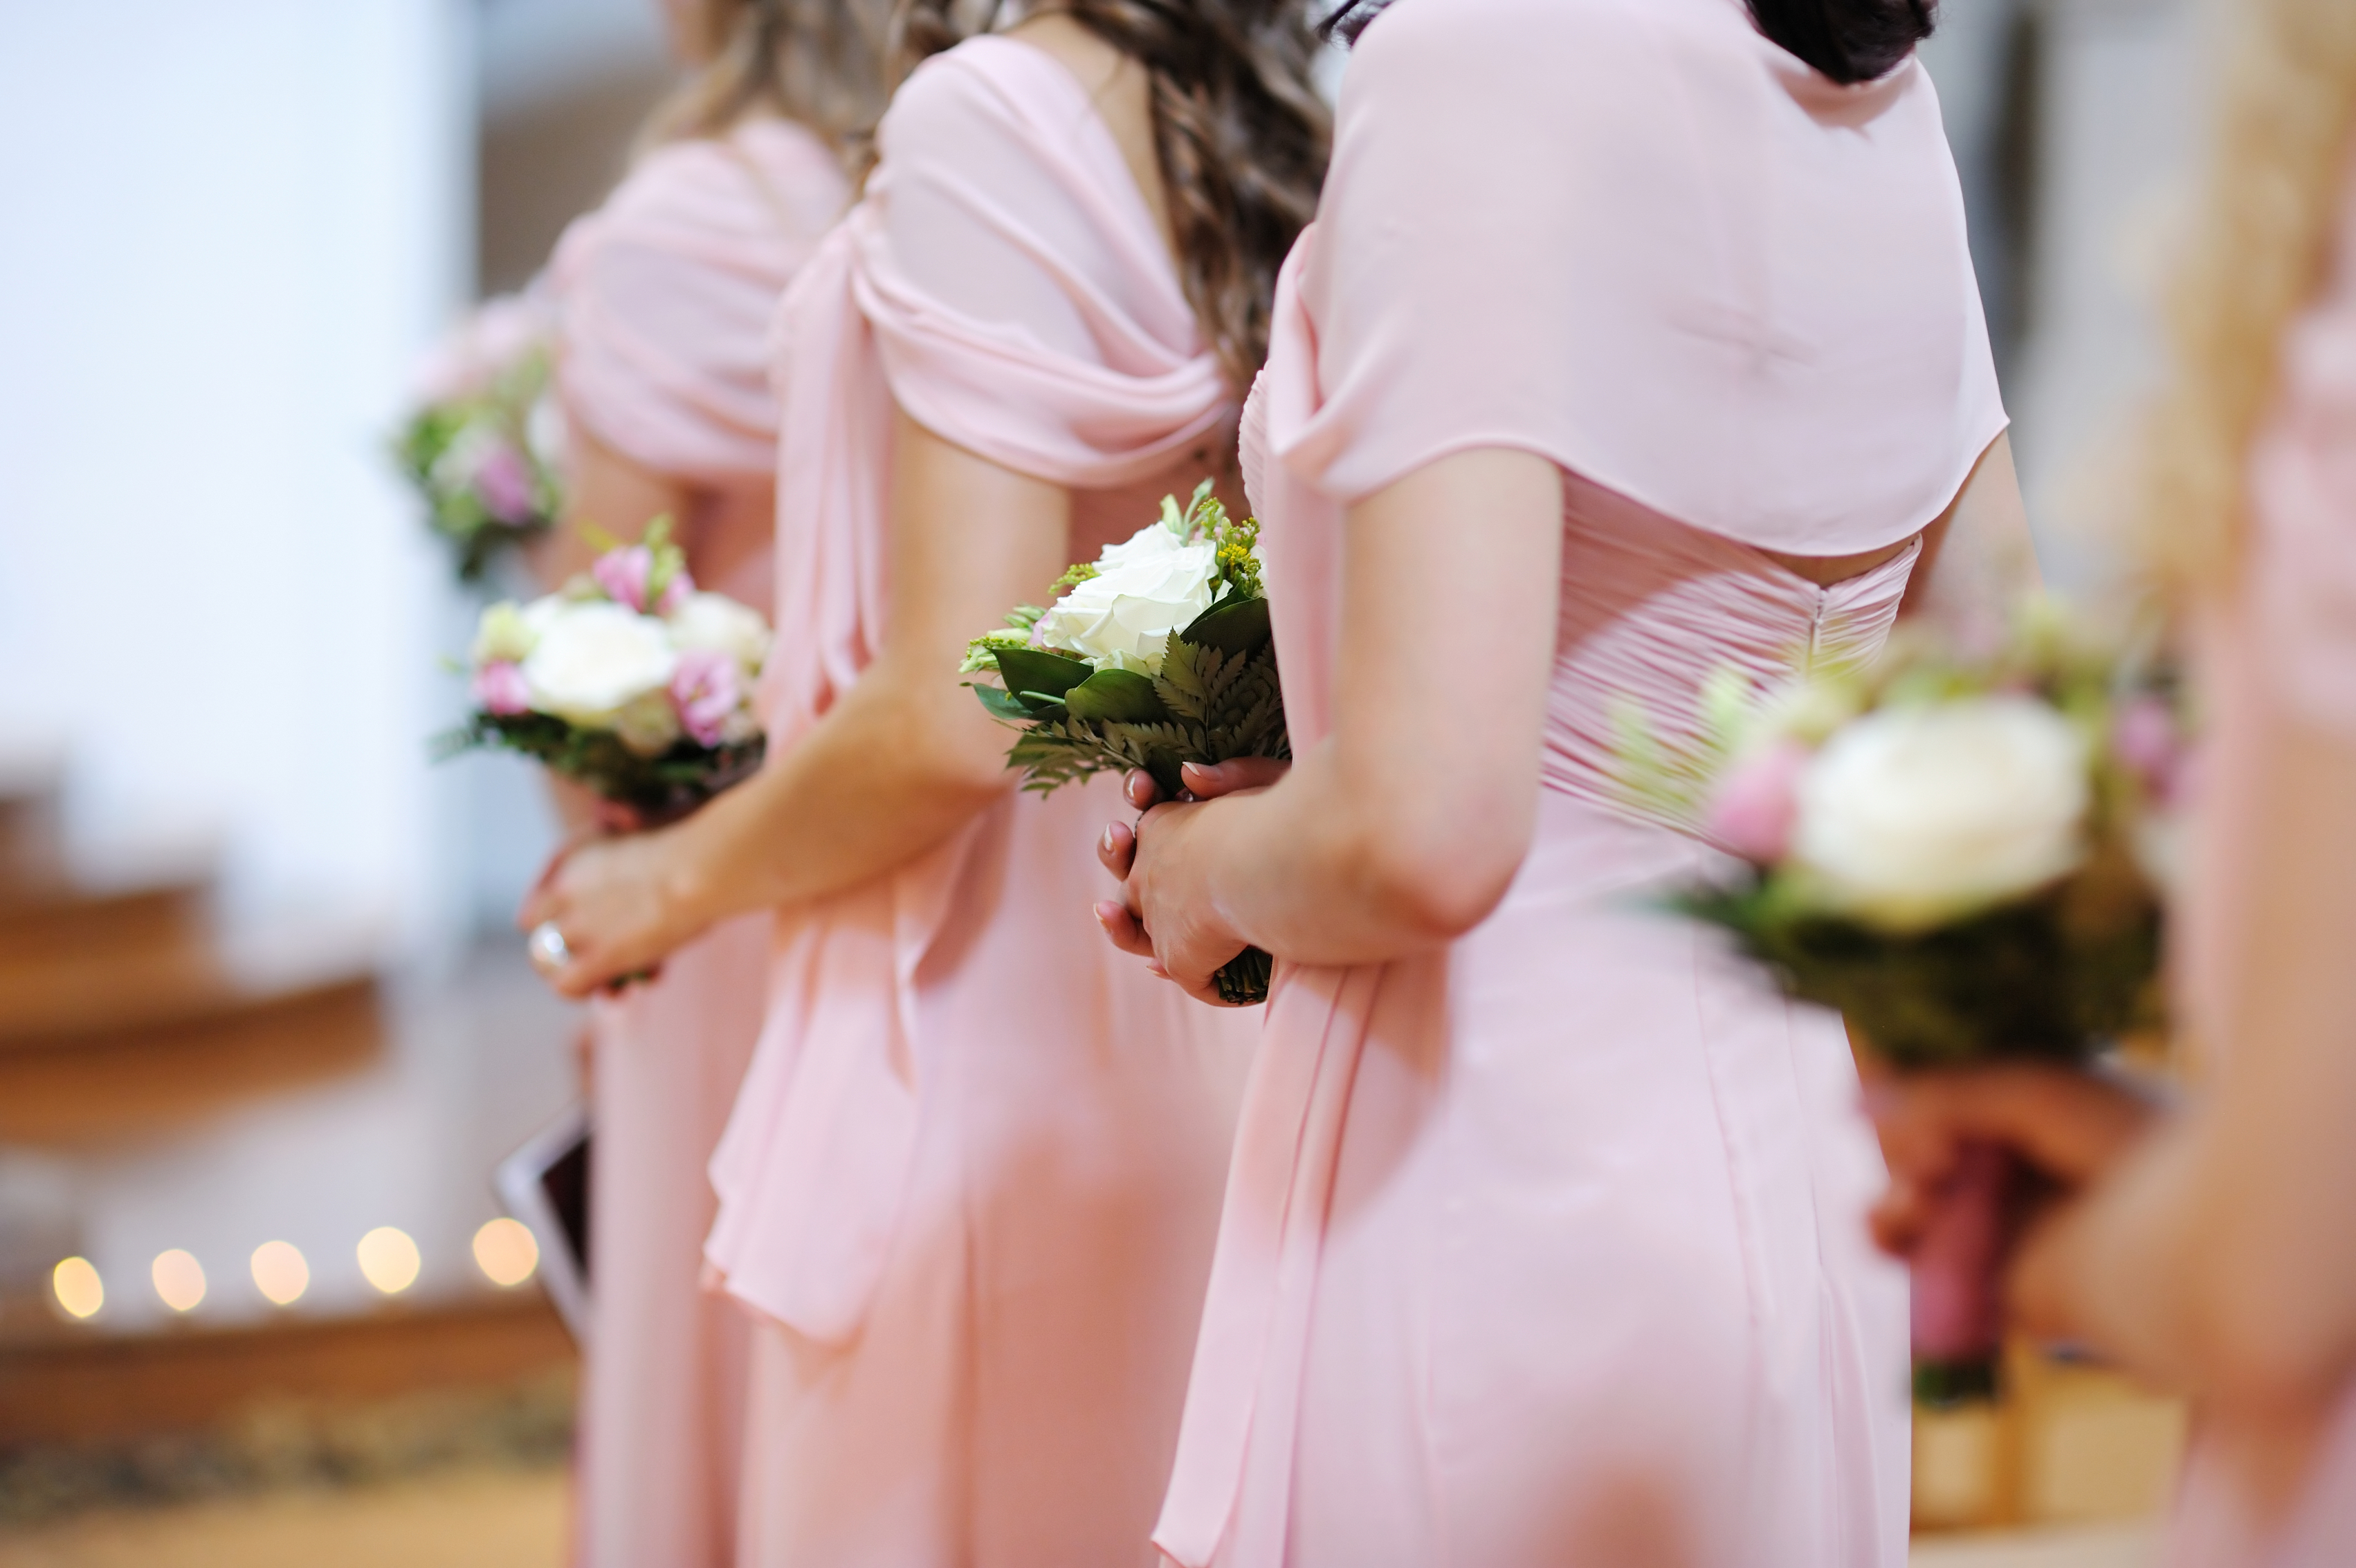 Three bridesmaids in pink dresses | Source: Shutterstock